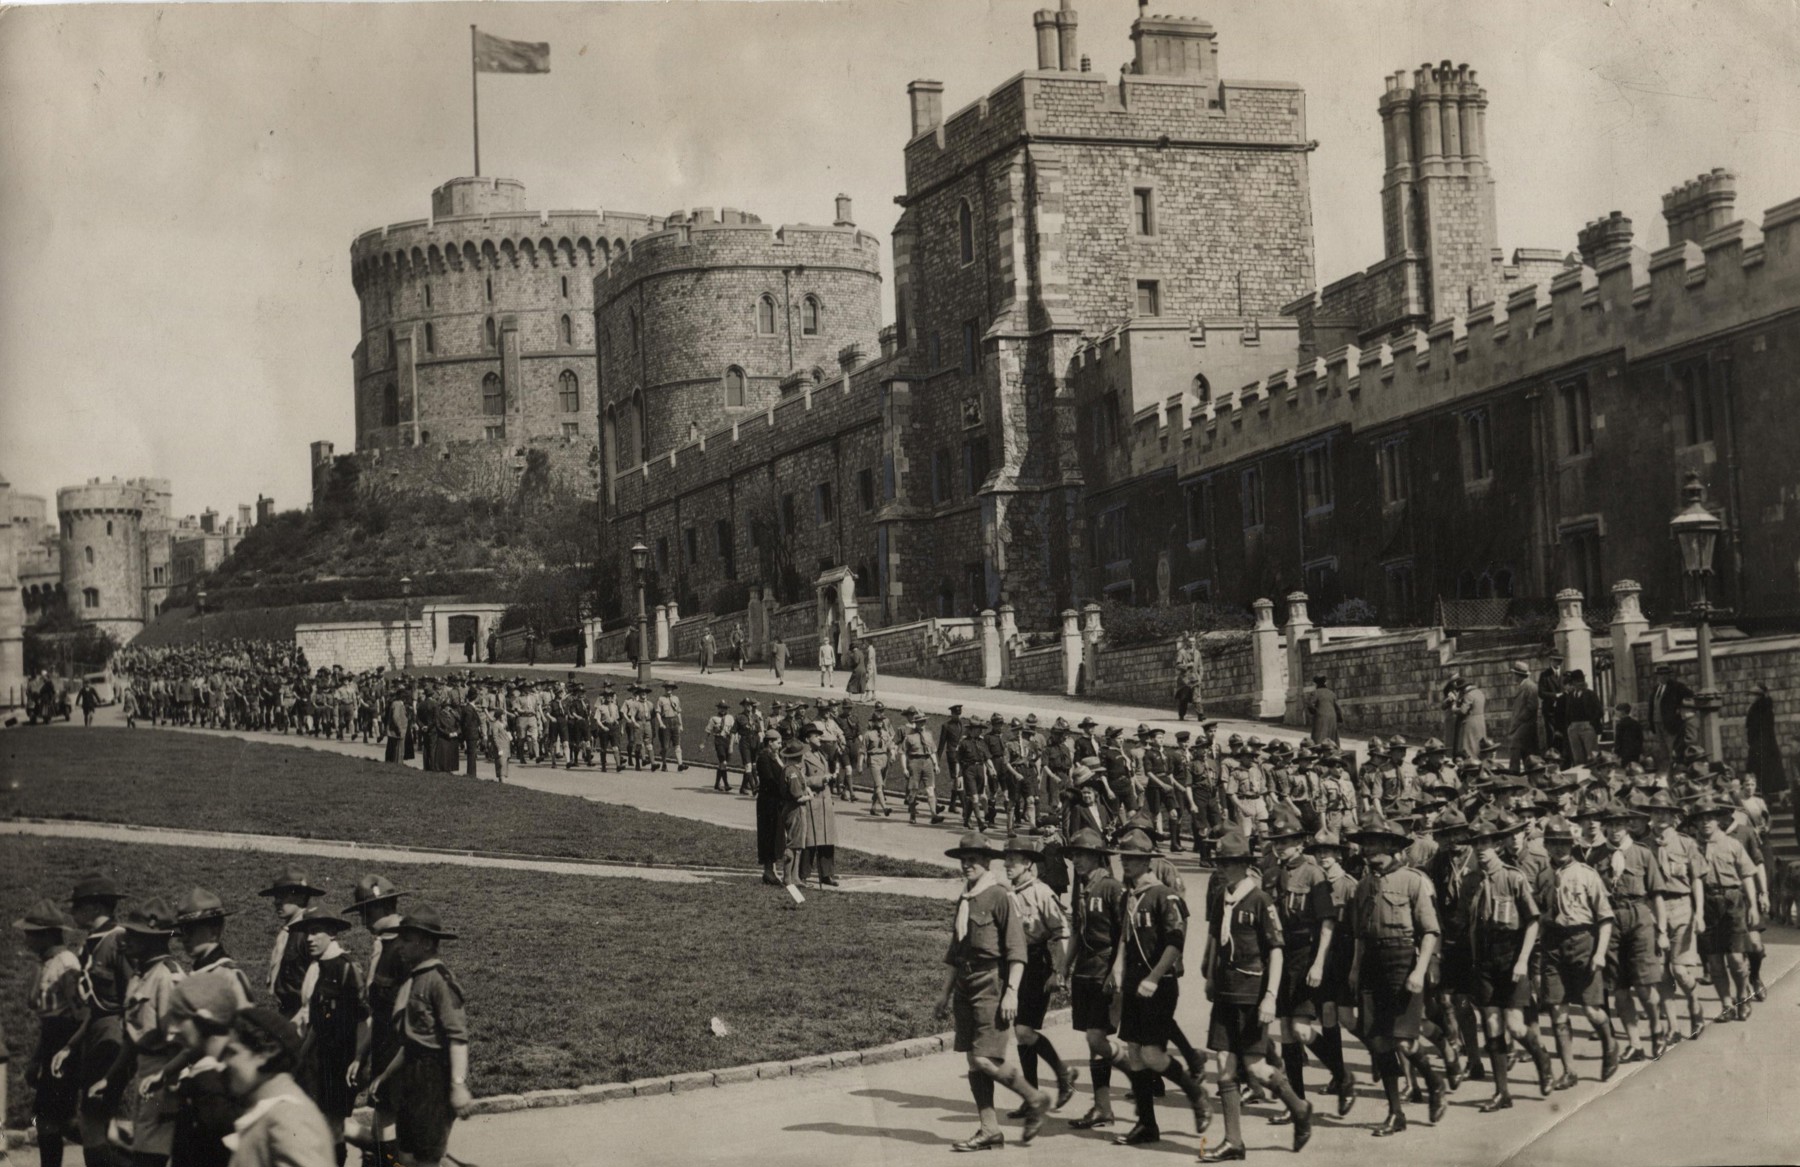 1934 Windsor Day of Celebration